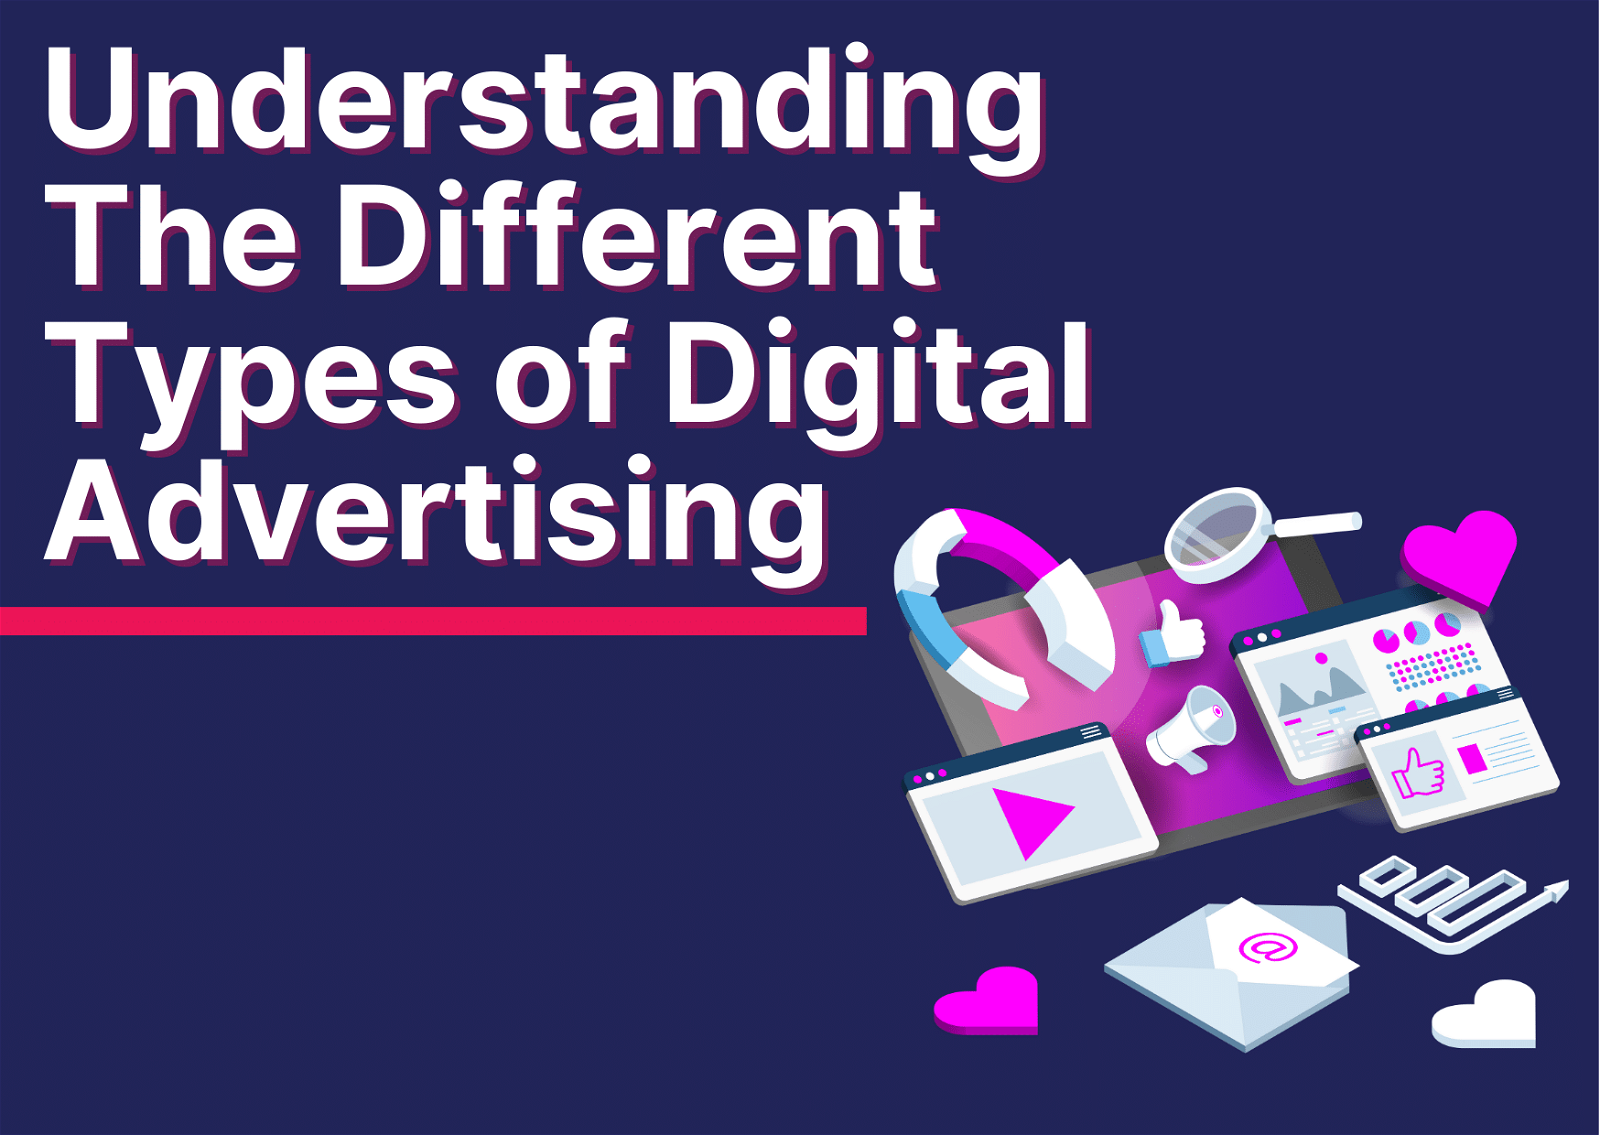 Types of Digital Advertising